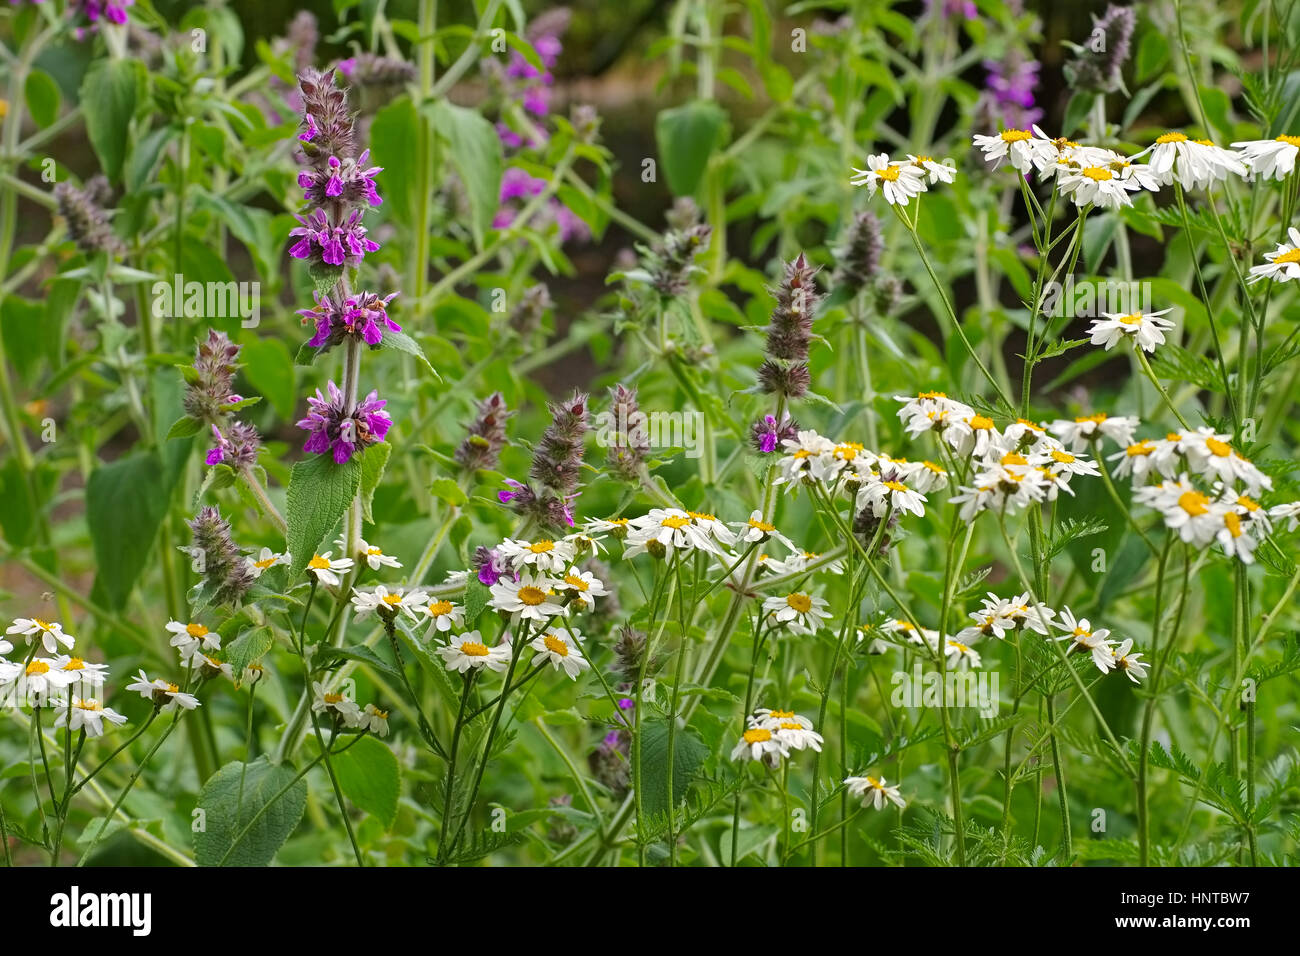 Xylanthemum tianschanicum und Stachys persica - Xylanthemum tianschanicum and Stachys persica, small wildflowers Stock Photo